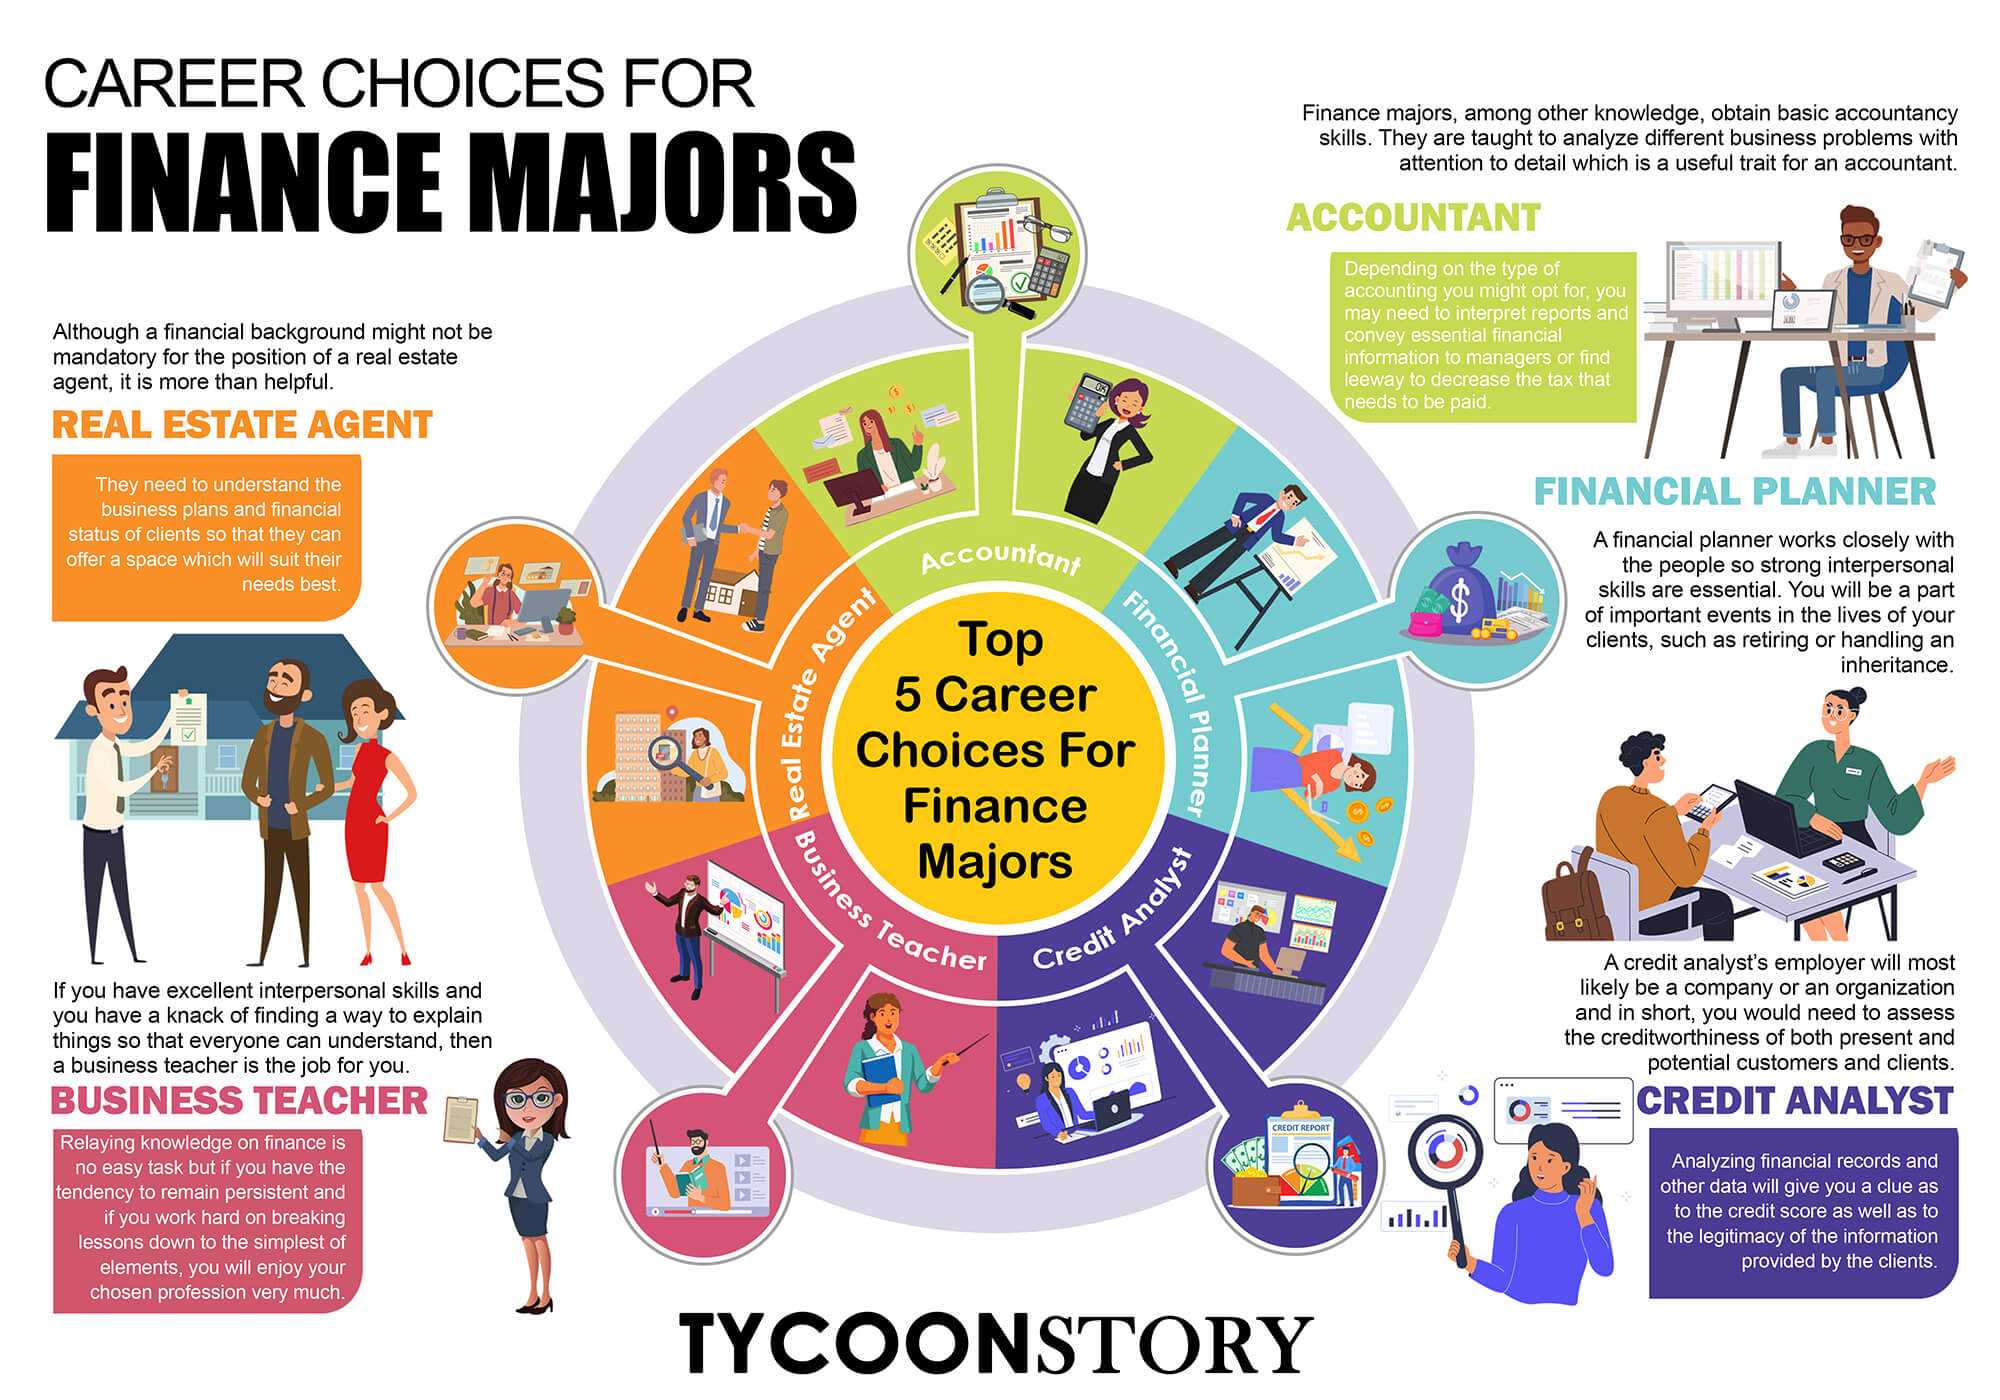 Top 5 career choices for finance majors